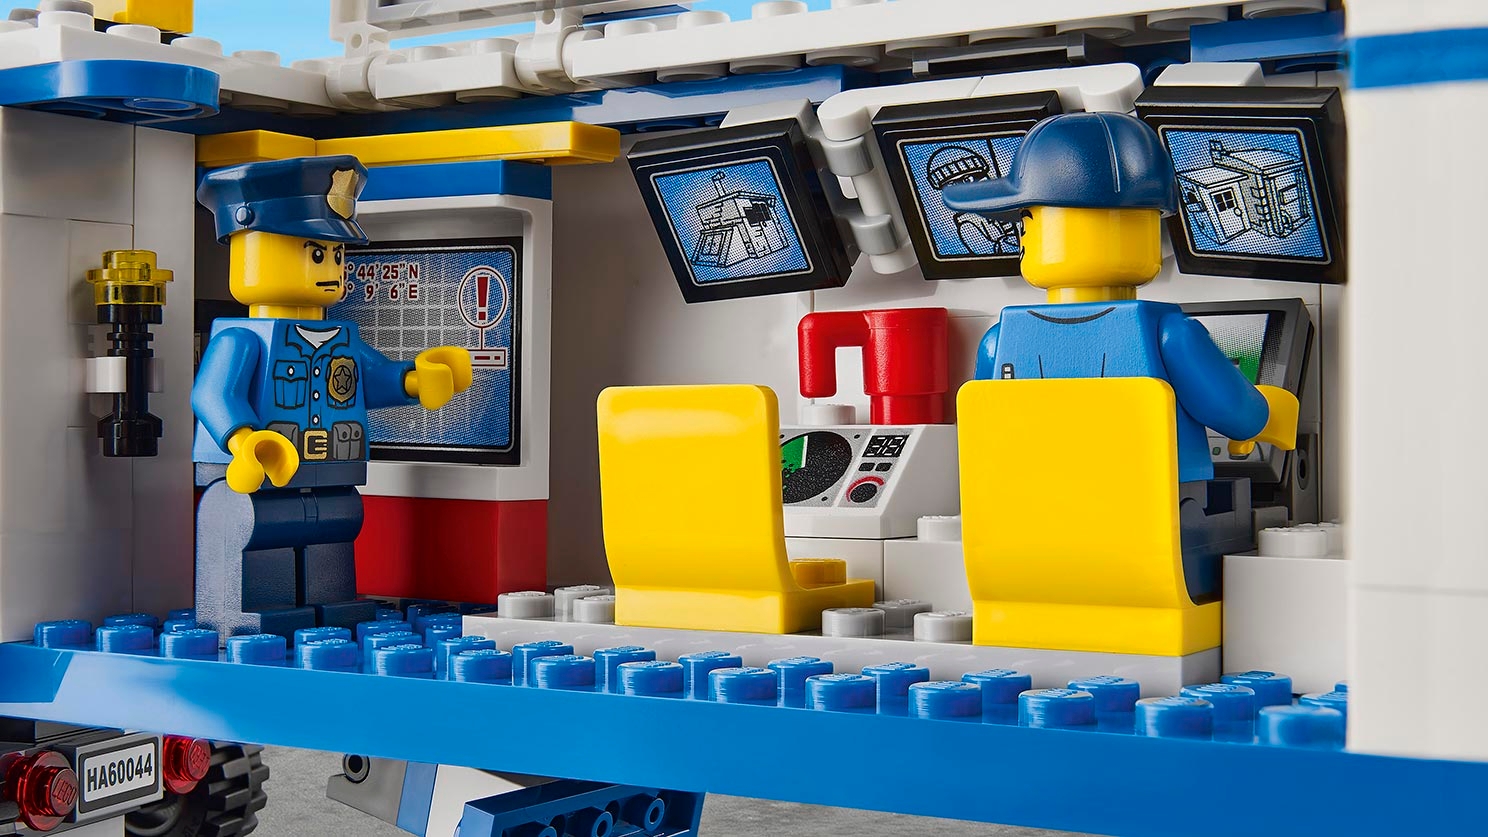 Mobile Police Unit Lego City Sets Lego Com For Kids